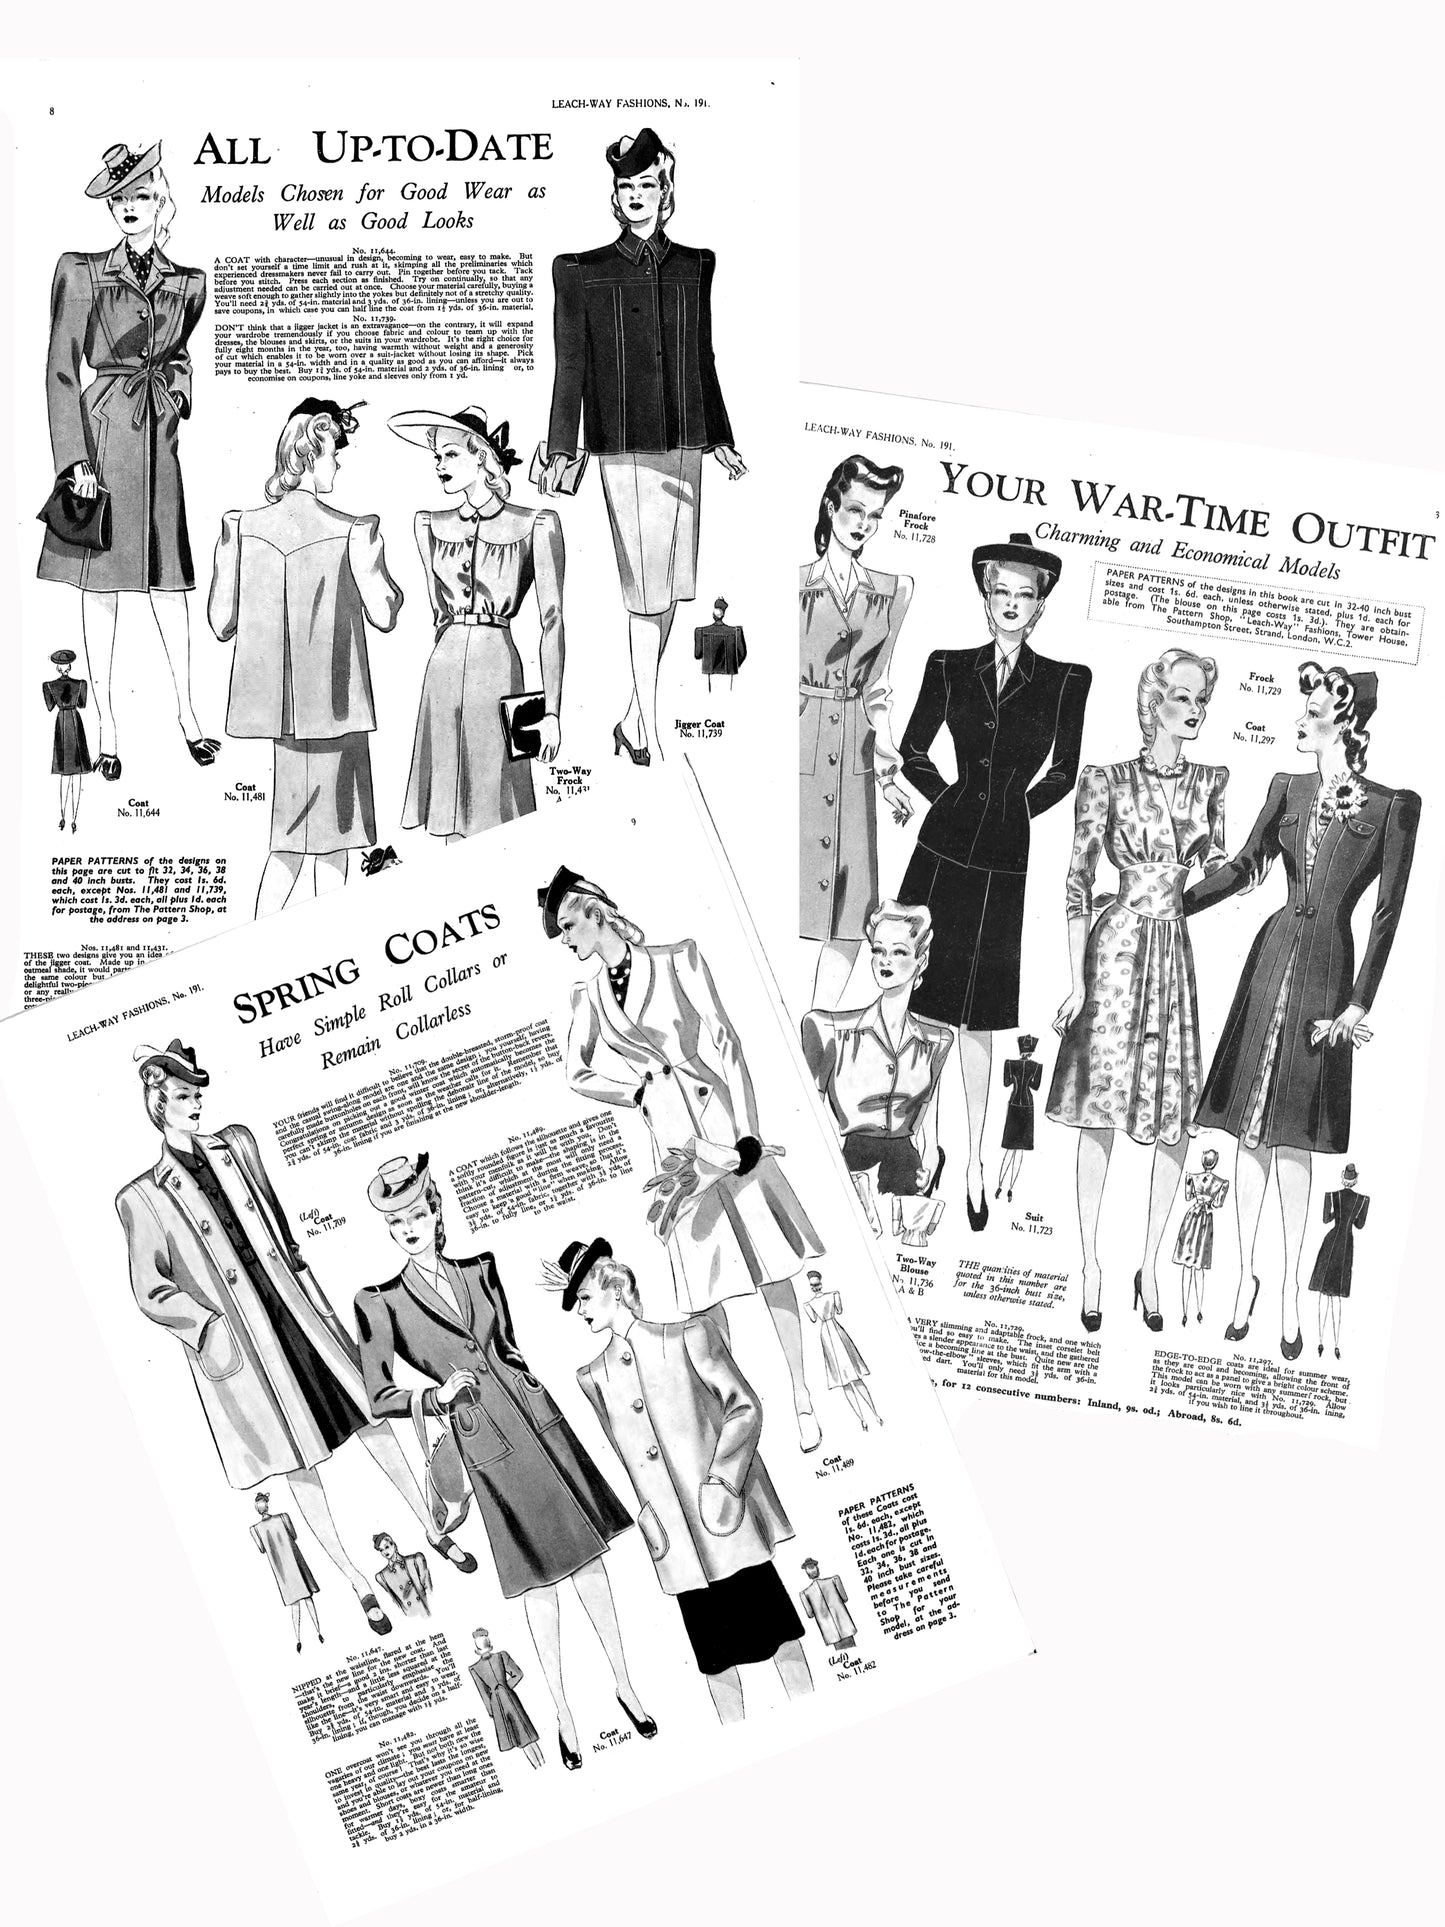 FREE 1940s Leach-Way Frocks & Coats Magazine